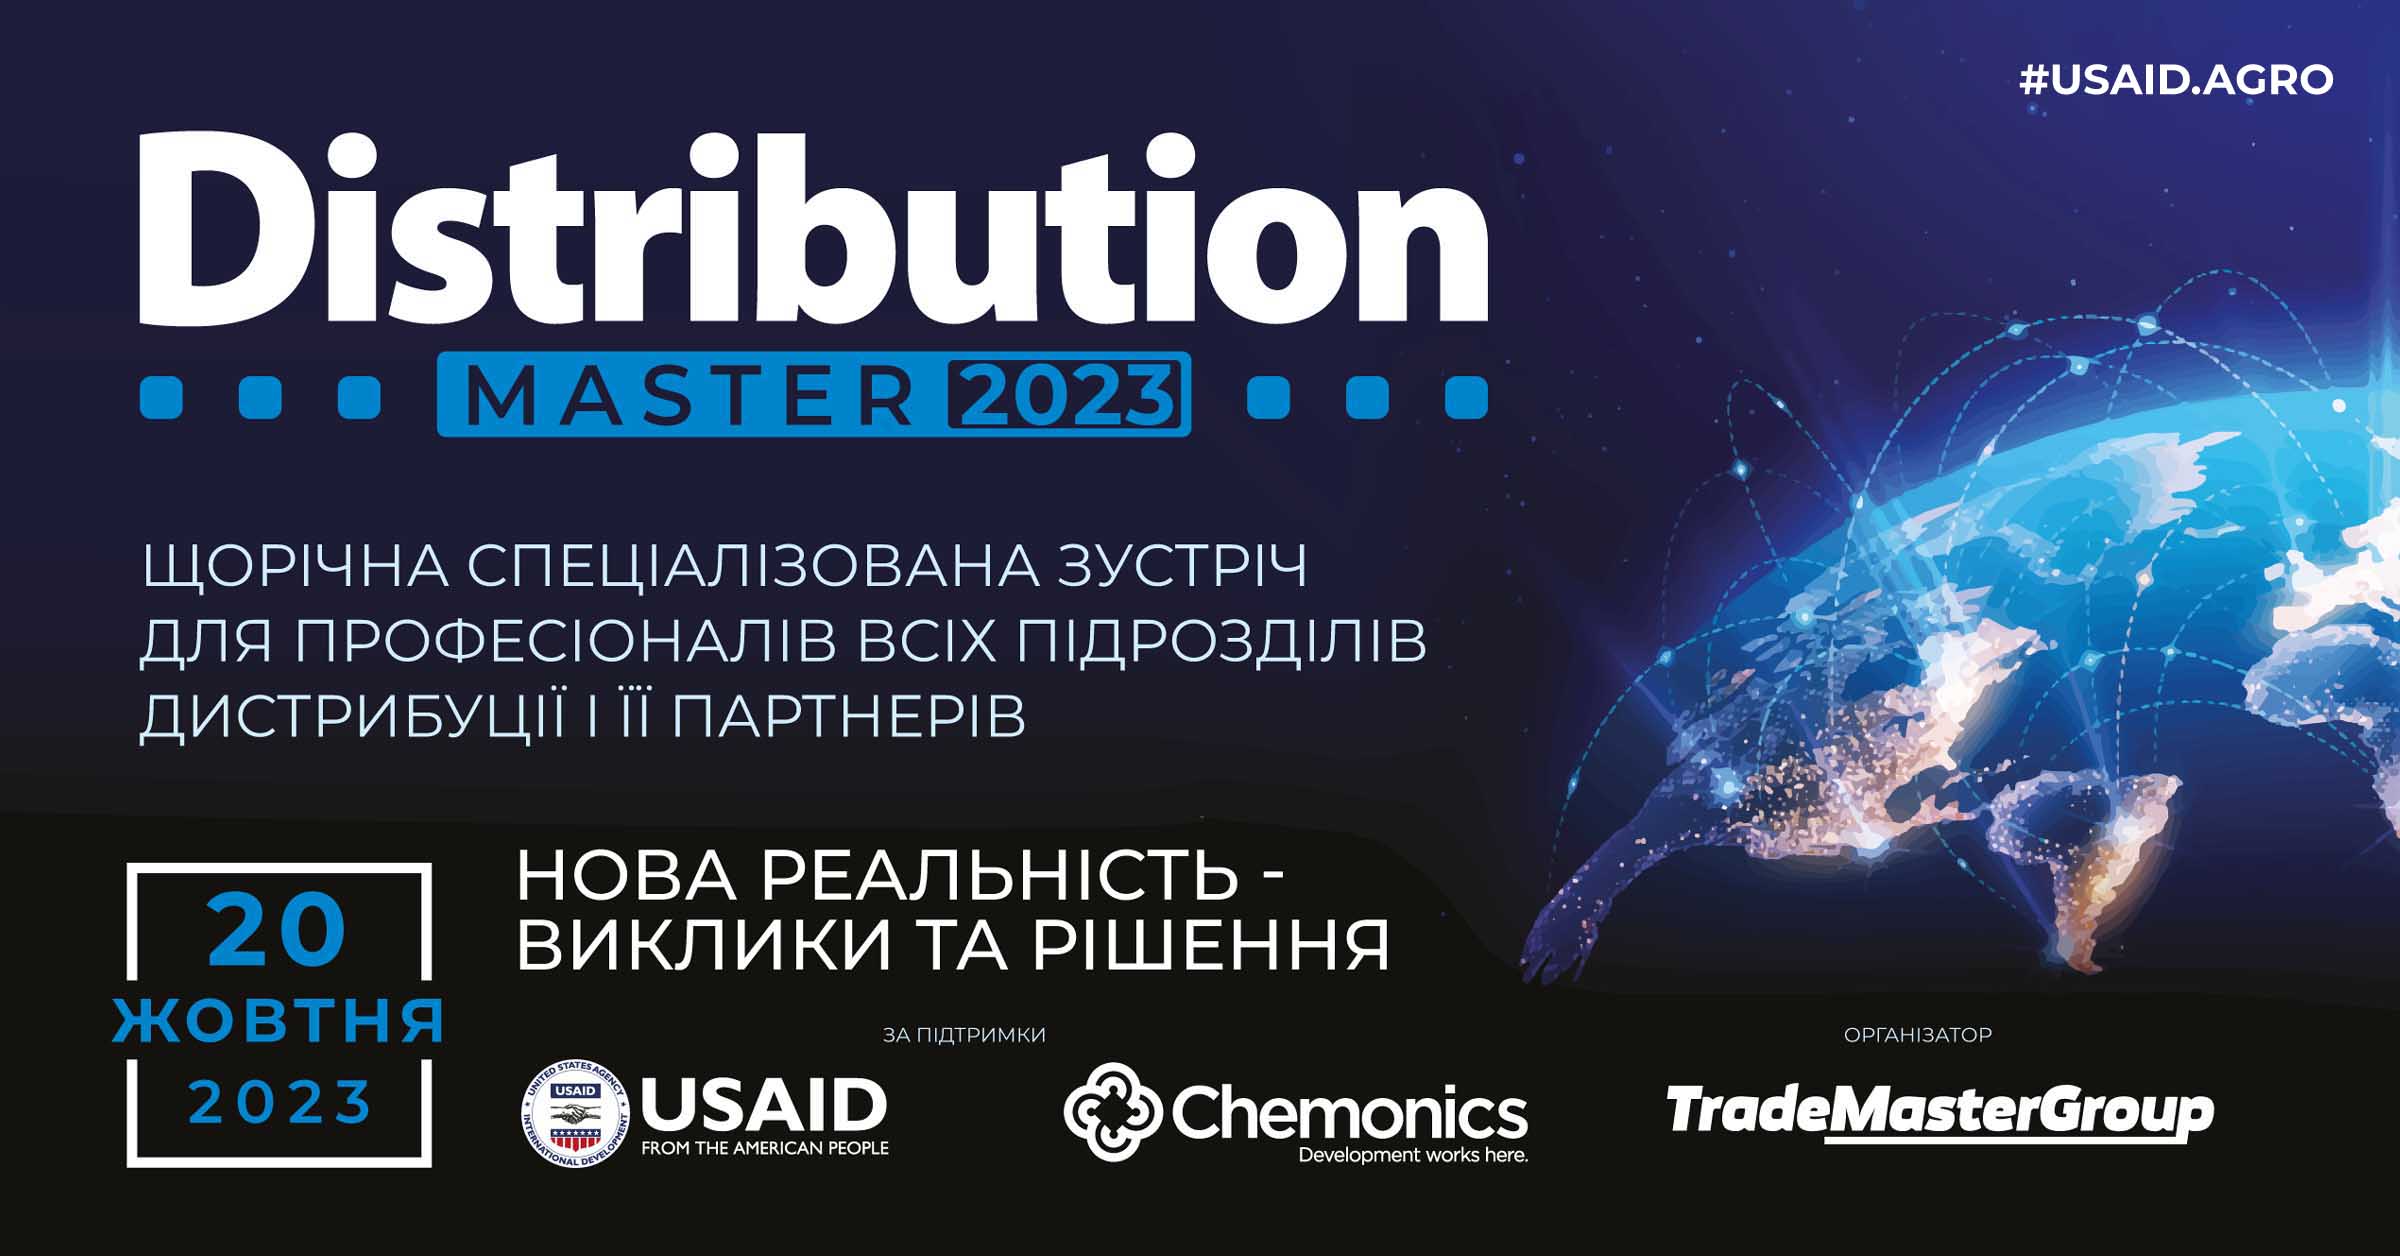 20    DistributionMaster-2023:  -  